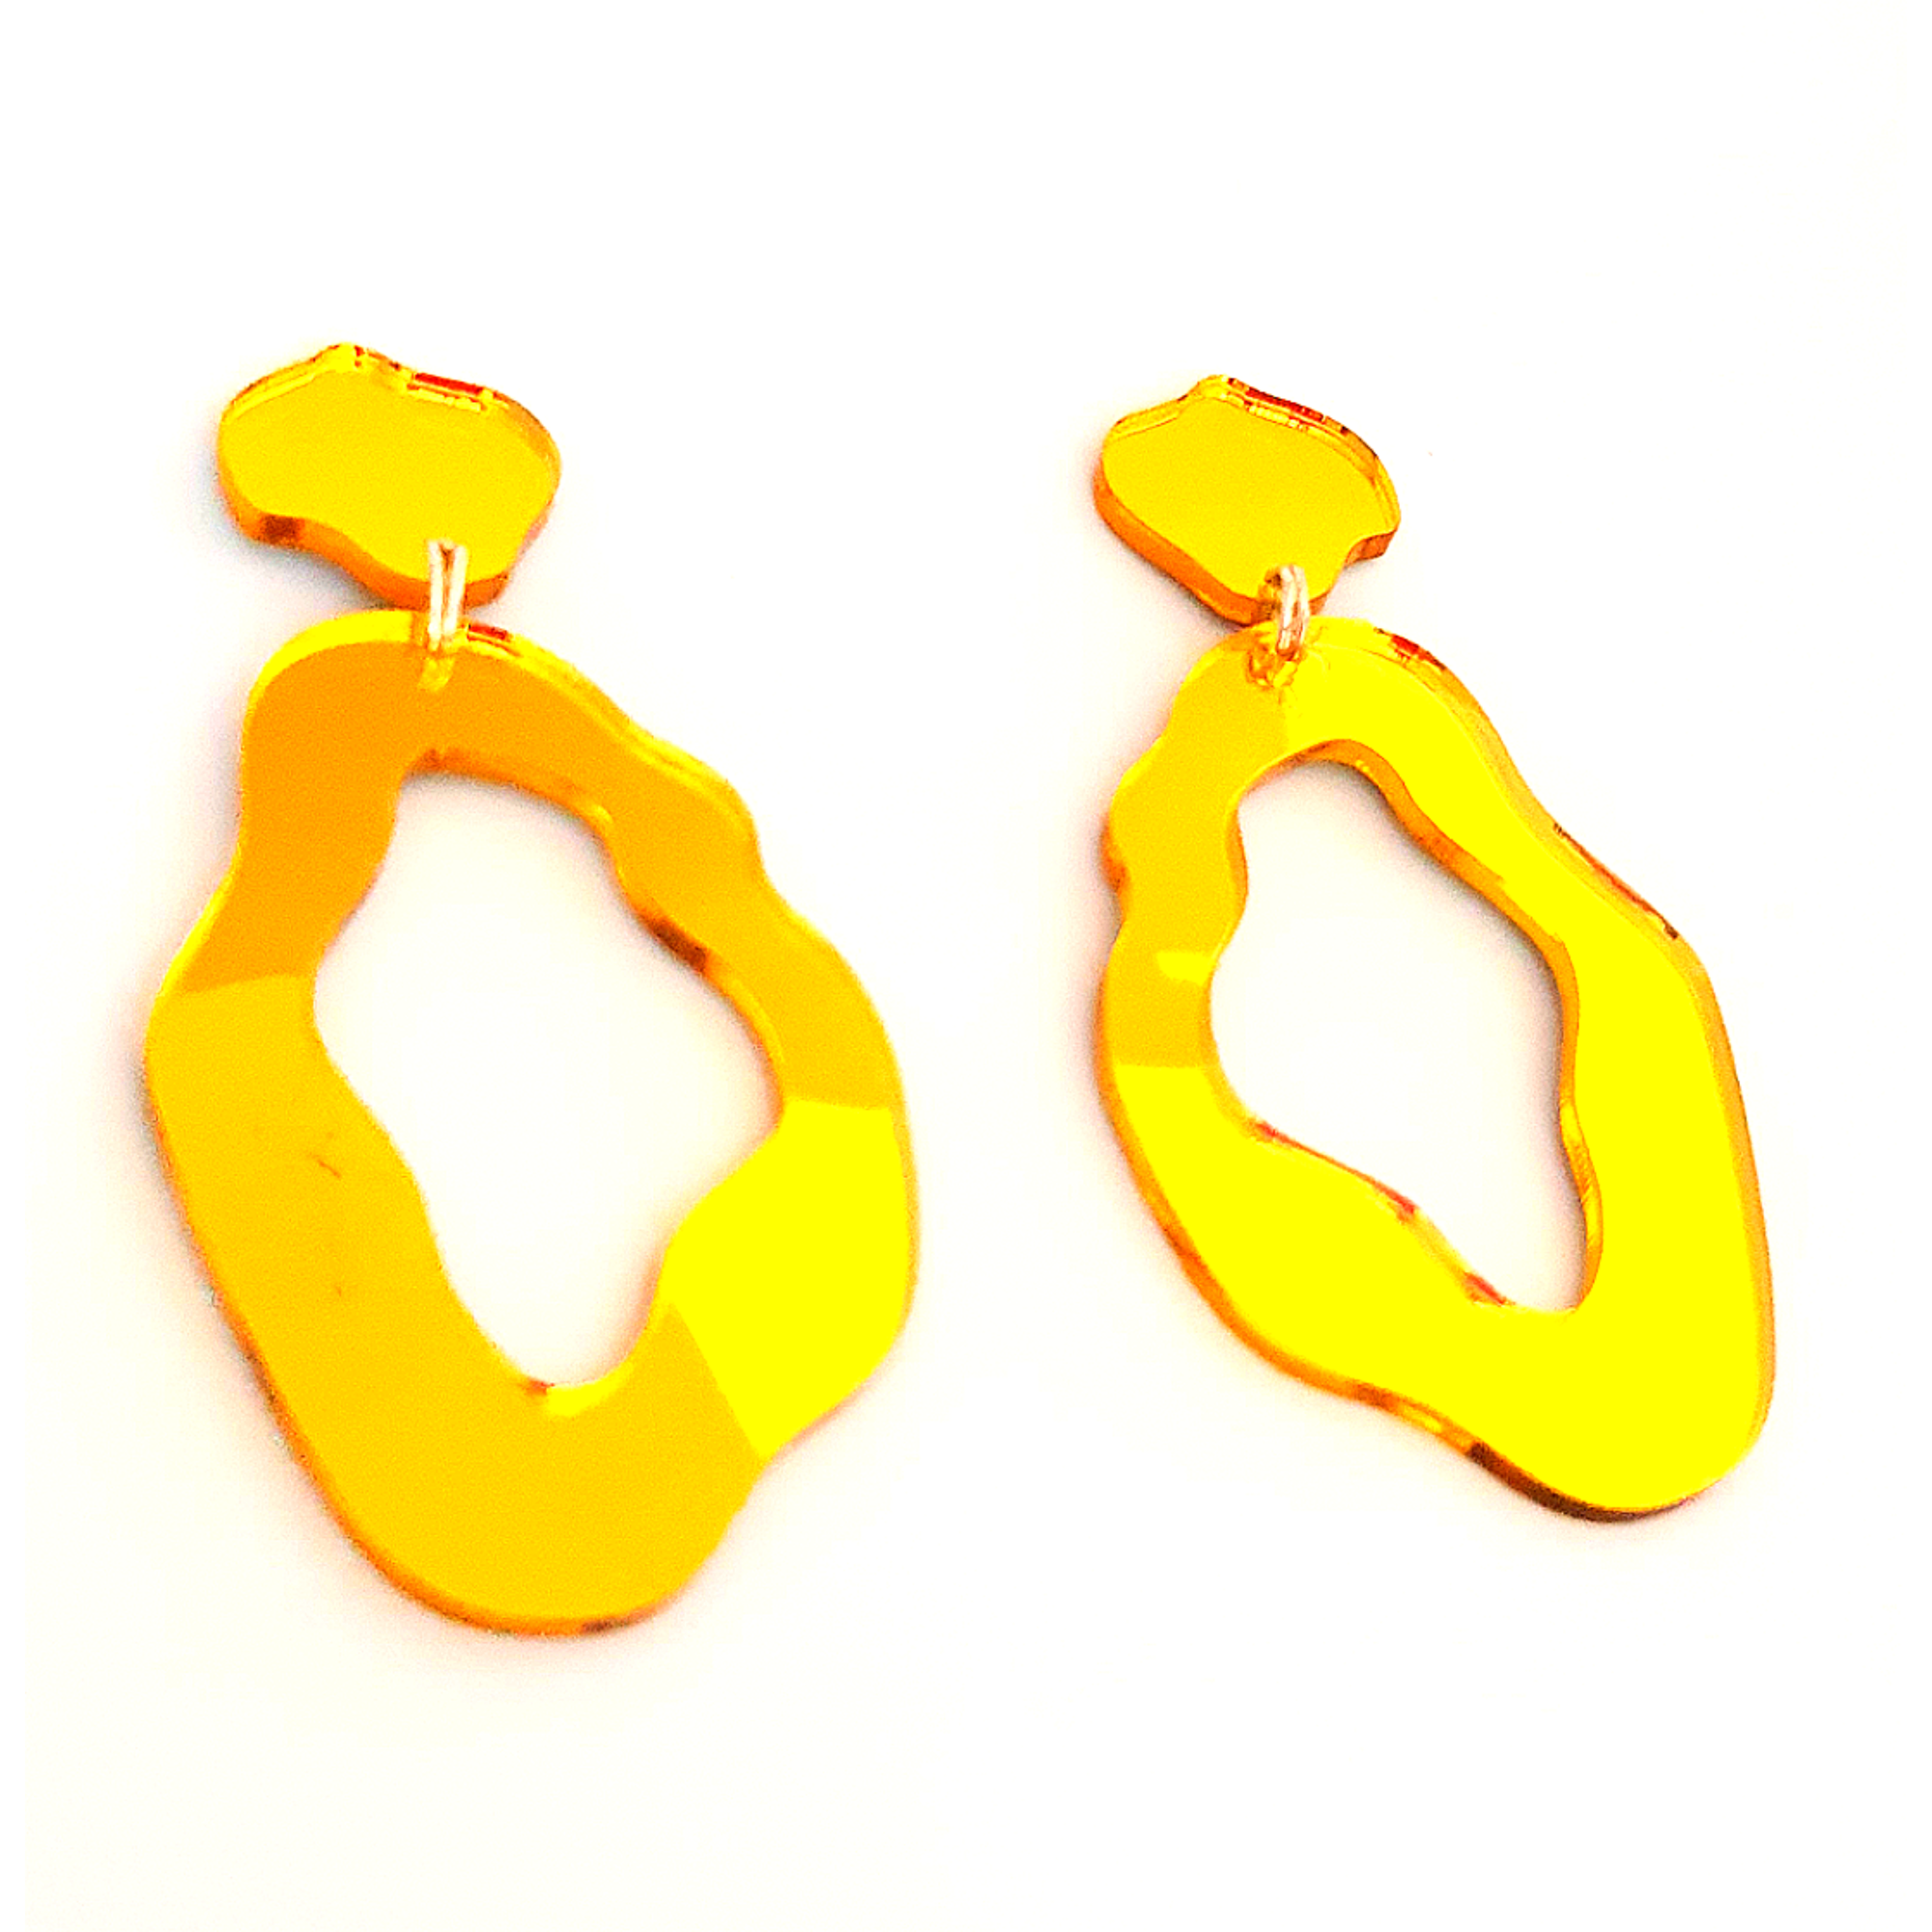 eve ray 'the garden 1925' yellow mirror earrings